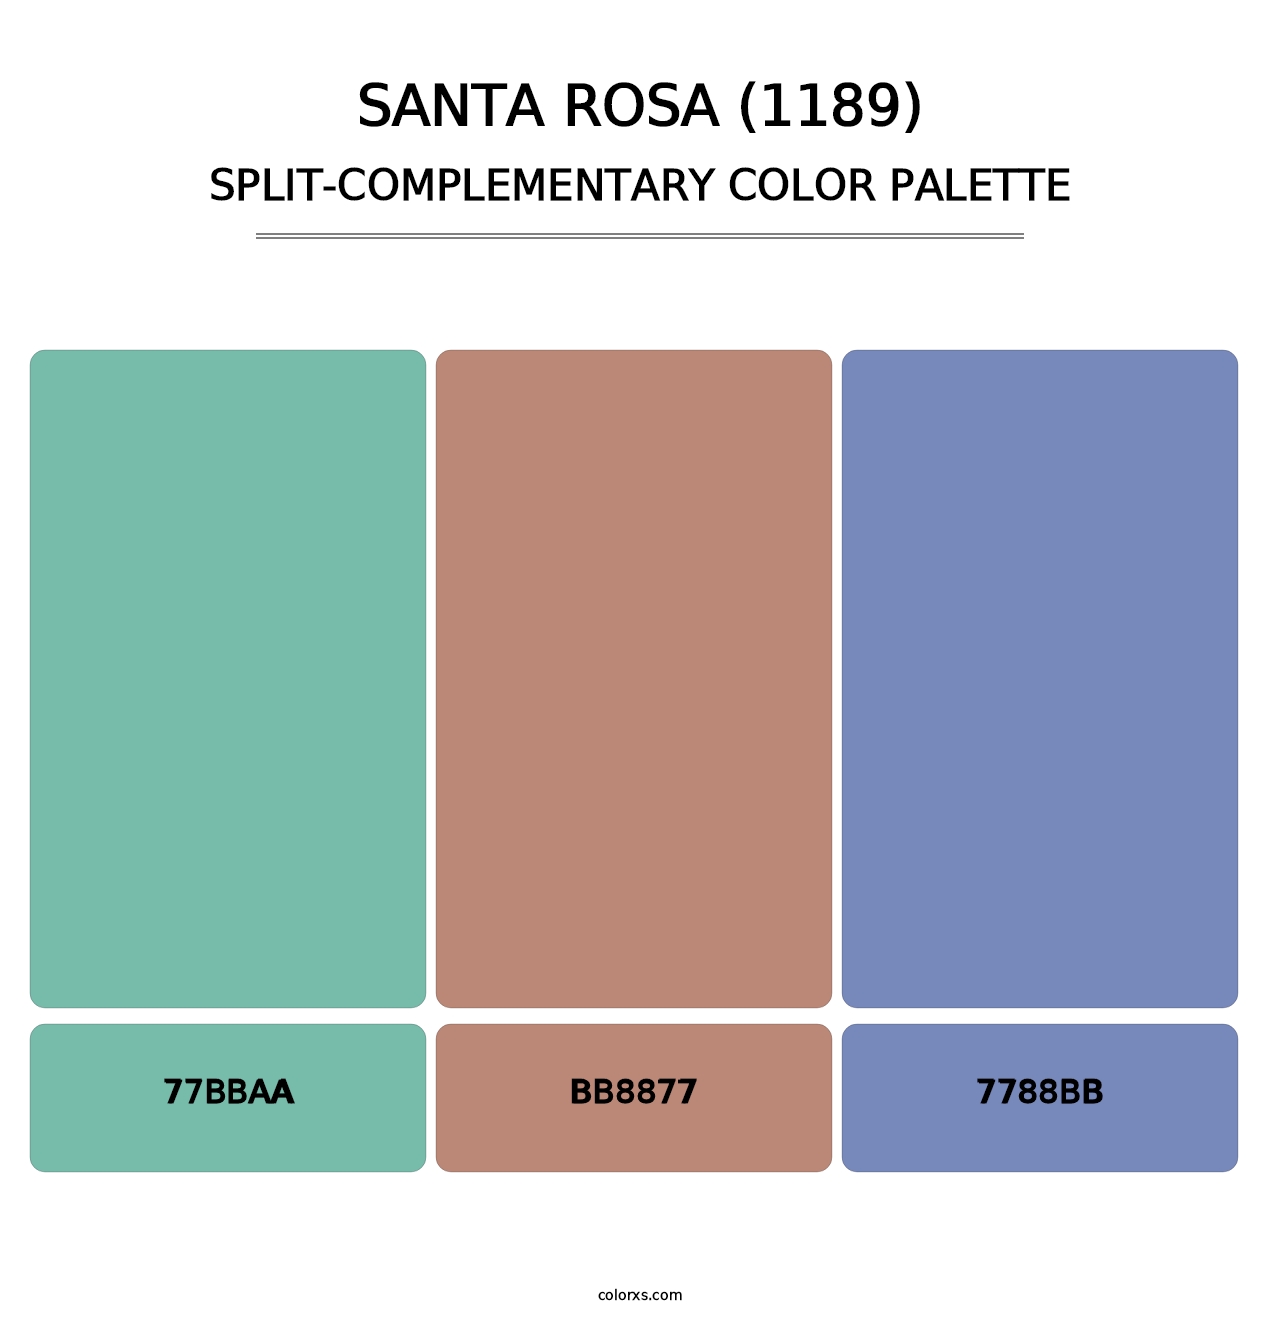 Santa Rosa (1189) - Split-Complementary Color Palette